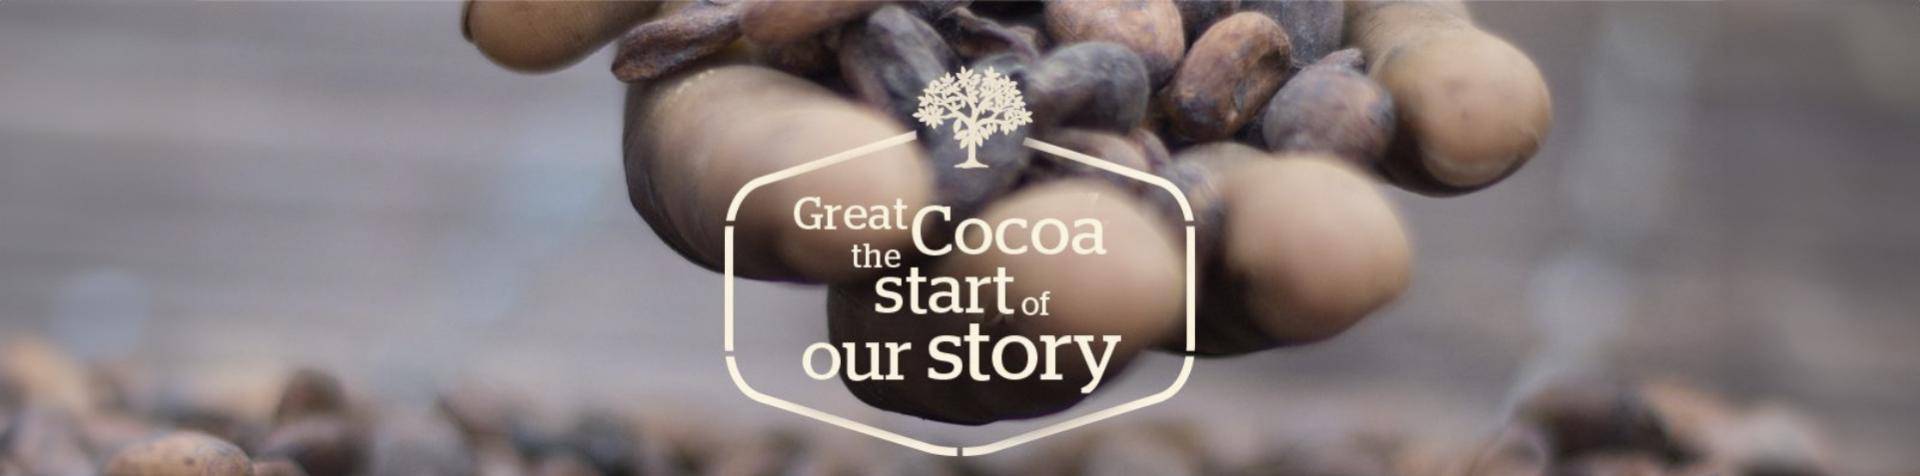 Great cocoa callebaut